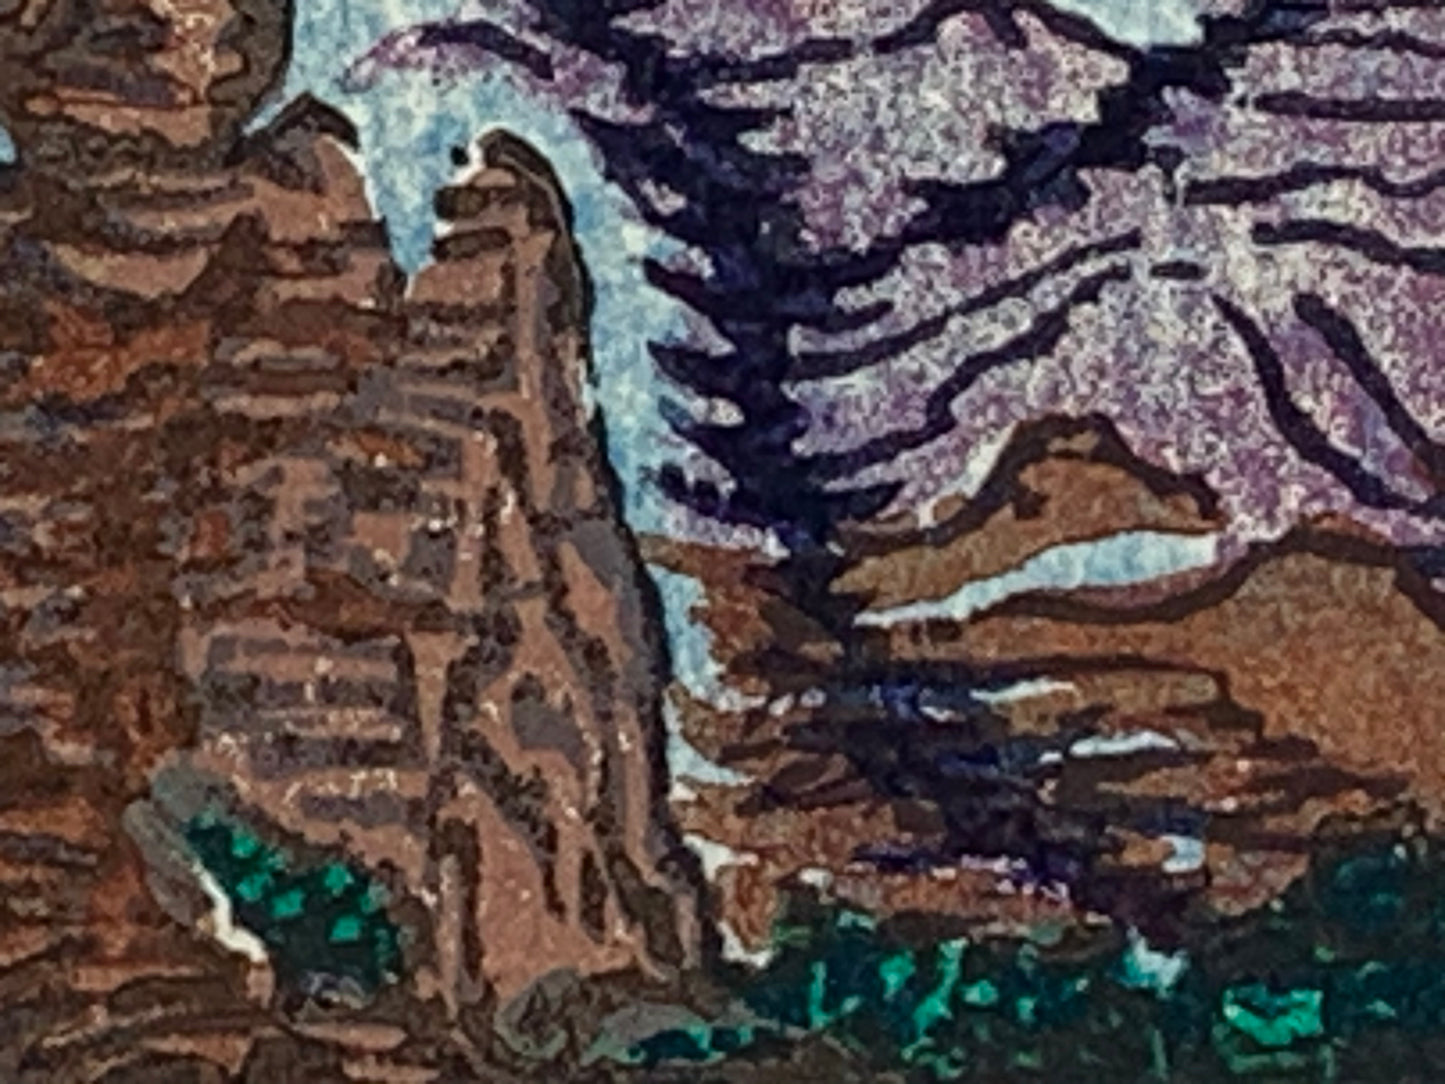 Baby Grand Canyon Pocket Art Original Color Woodcut